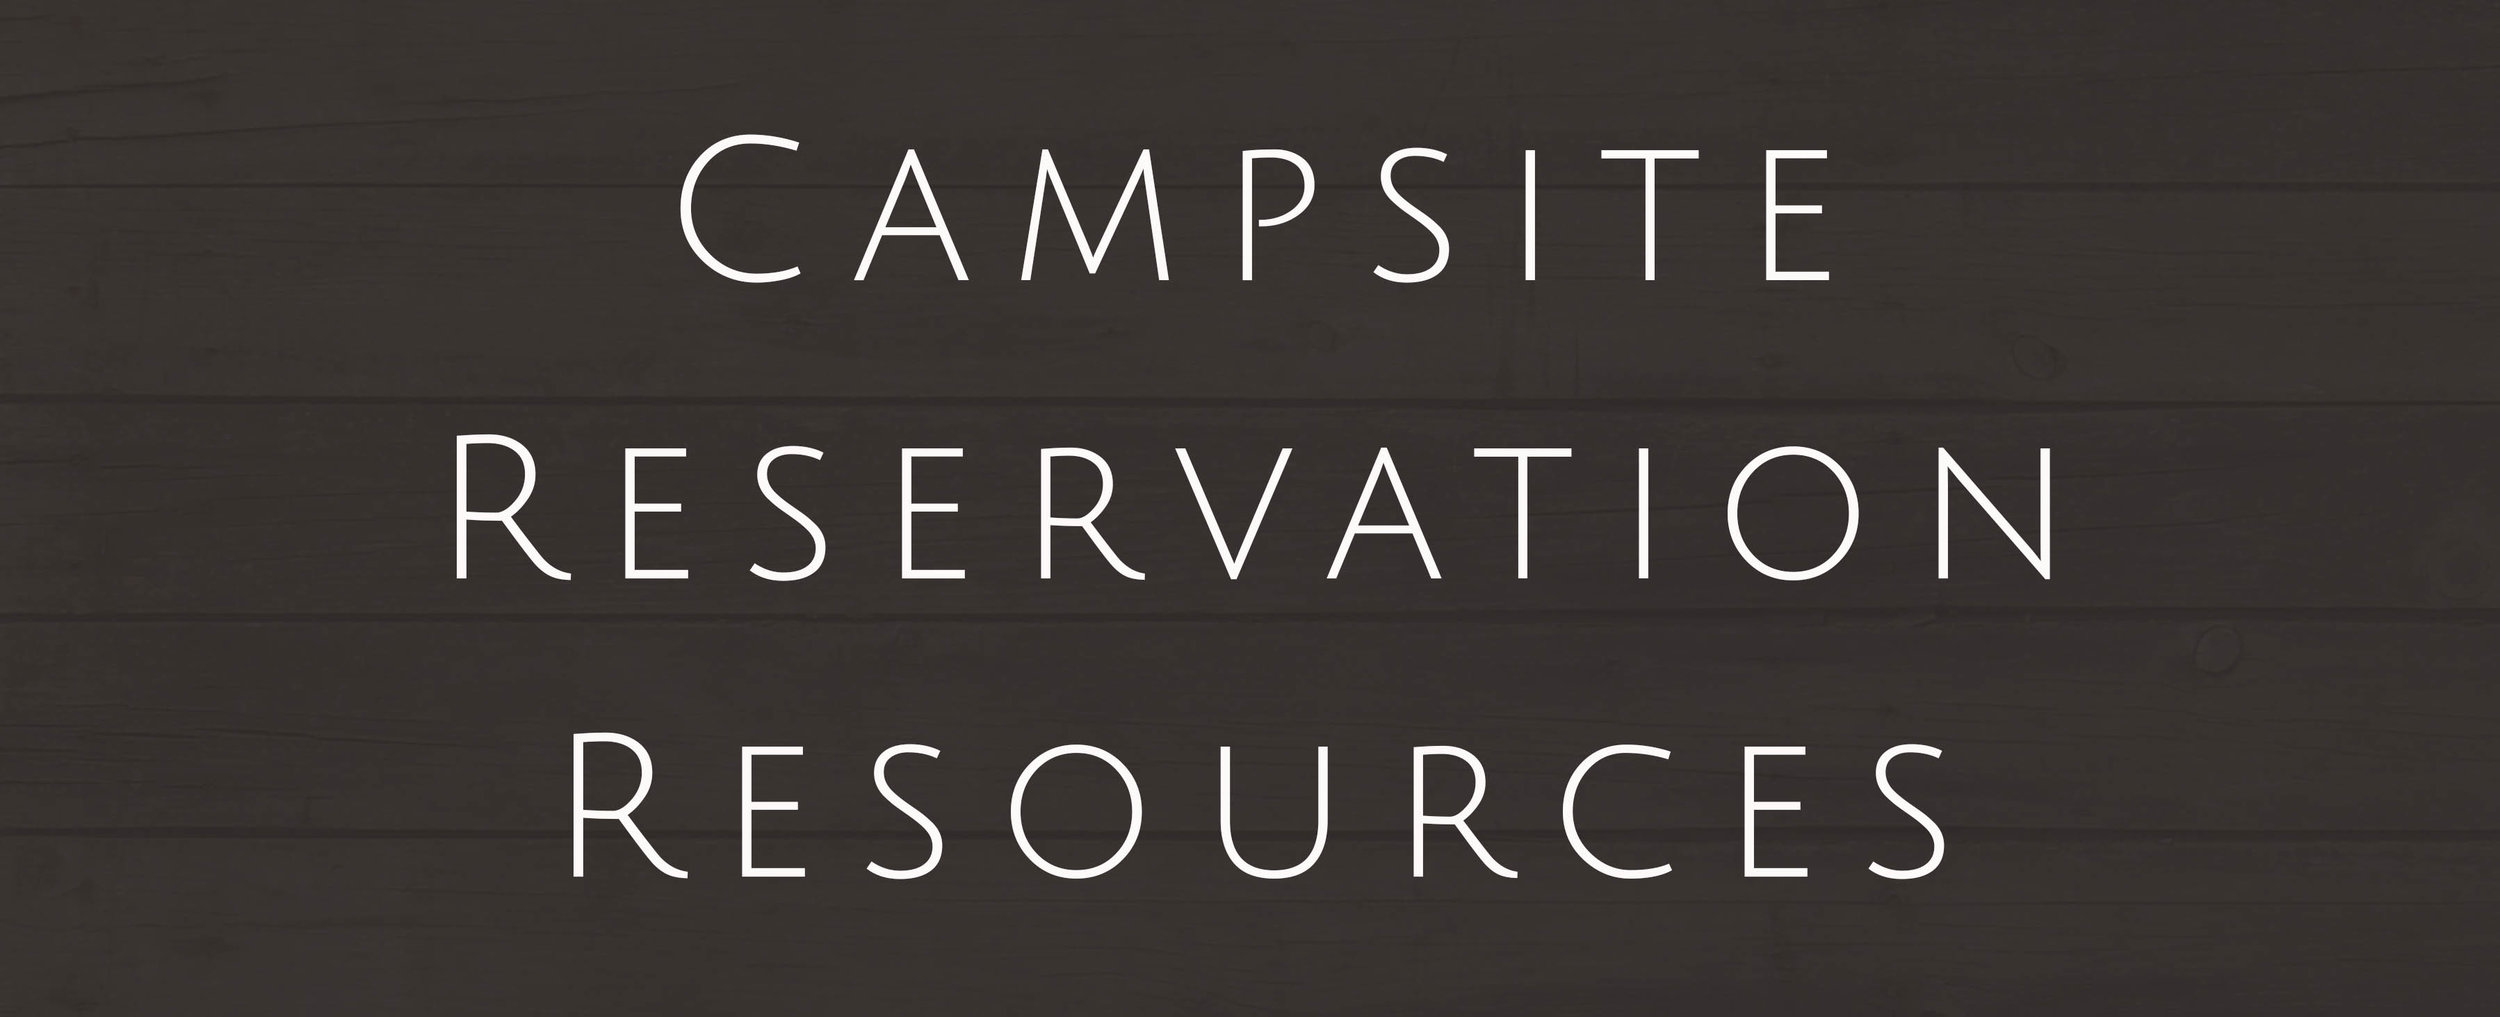 Yosemite - Campsite Reservation Resources.jpg